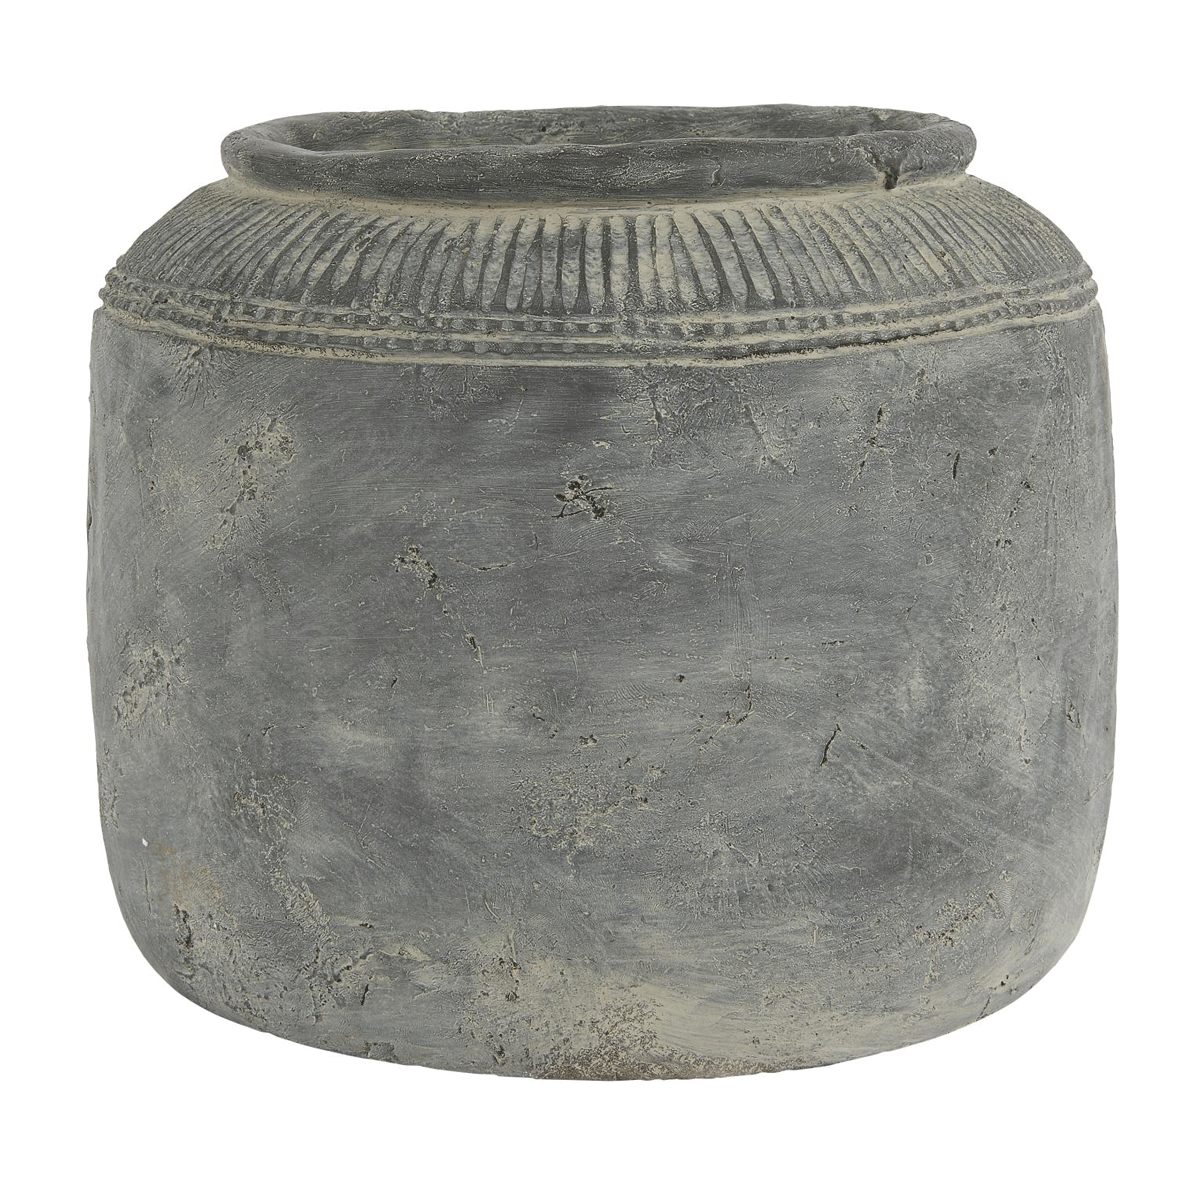 IB Laursen cement Pot Cleopatra 27 cm diameter 13105-18